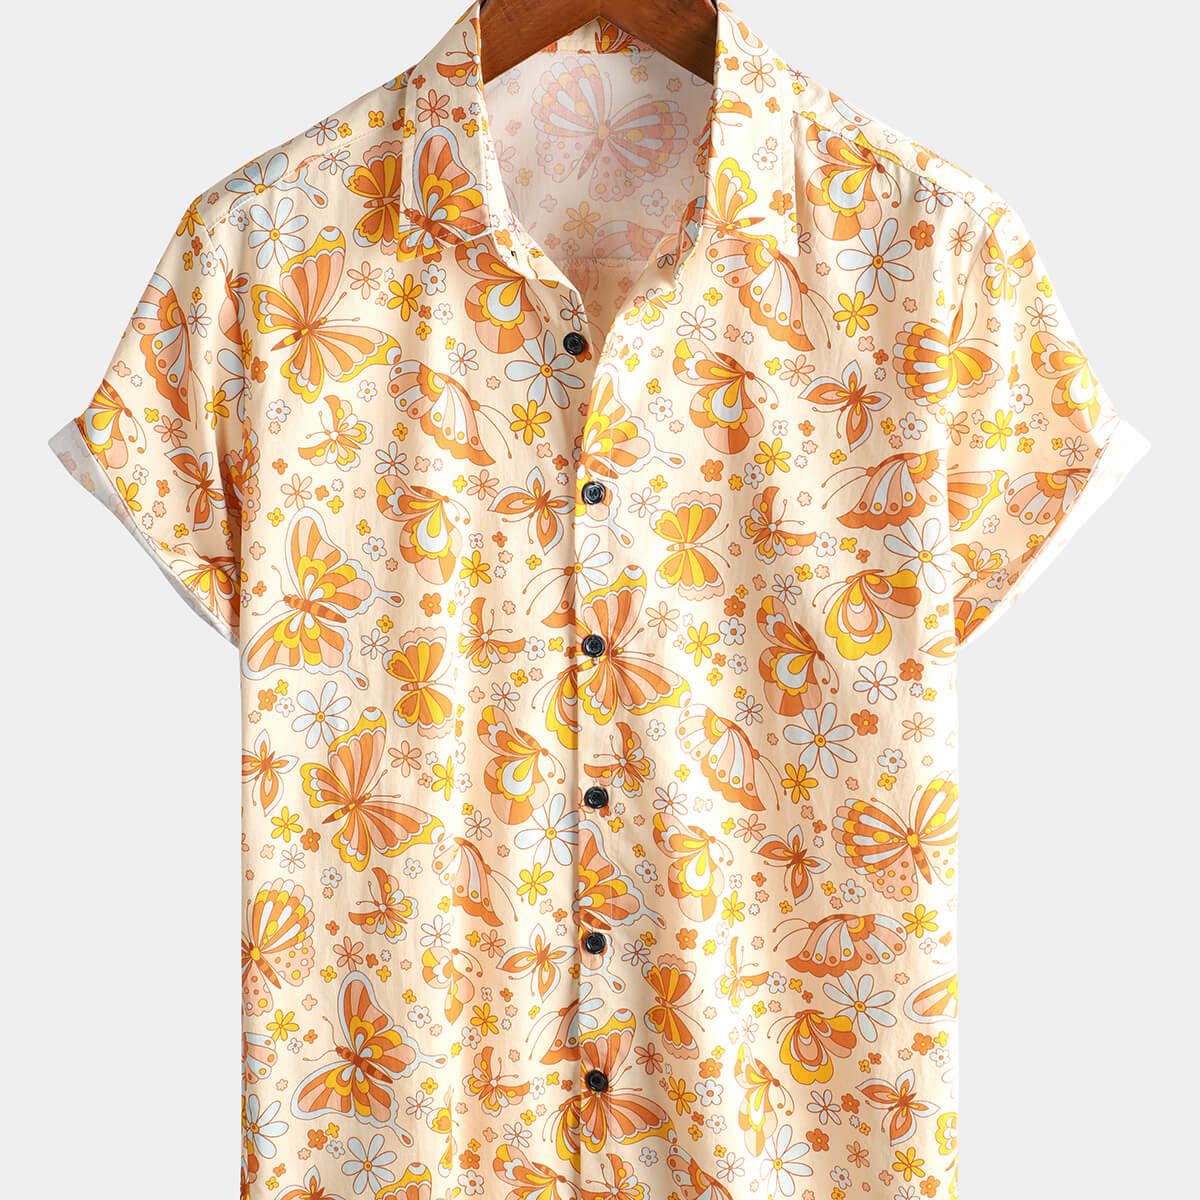 Men's Butterfly Vintage Floral Print Short Sleeve Shirt